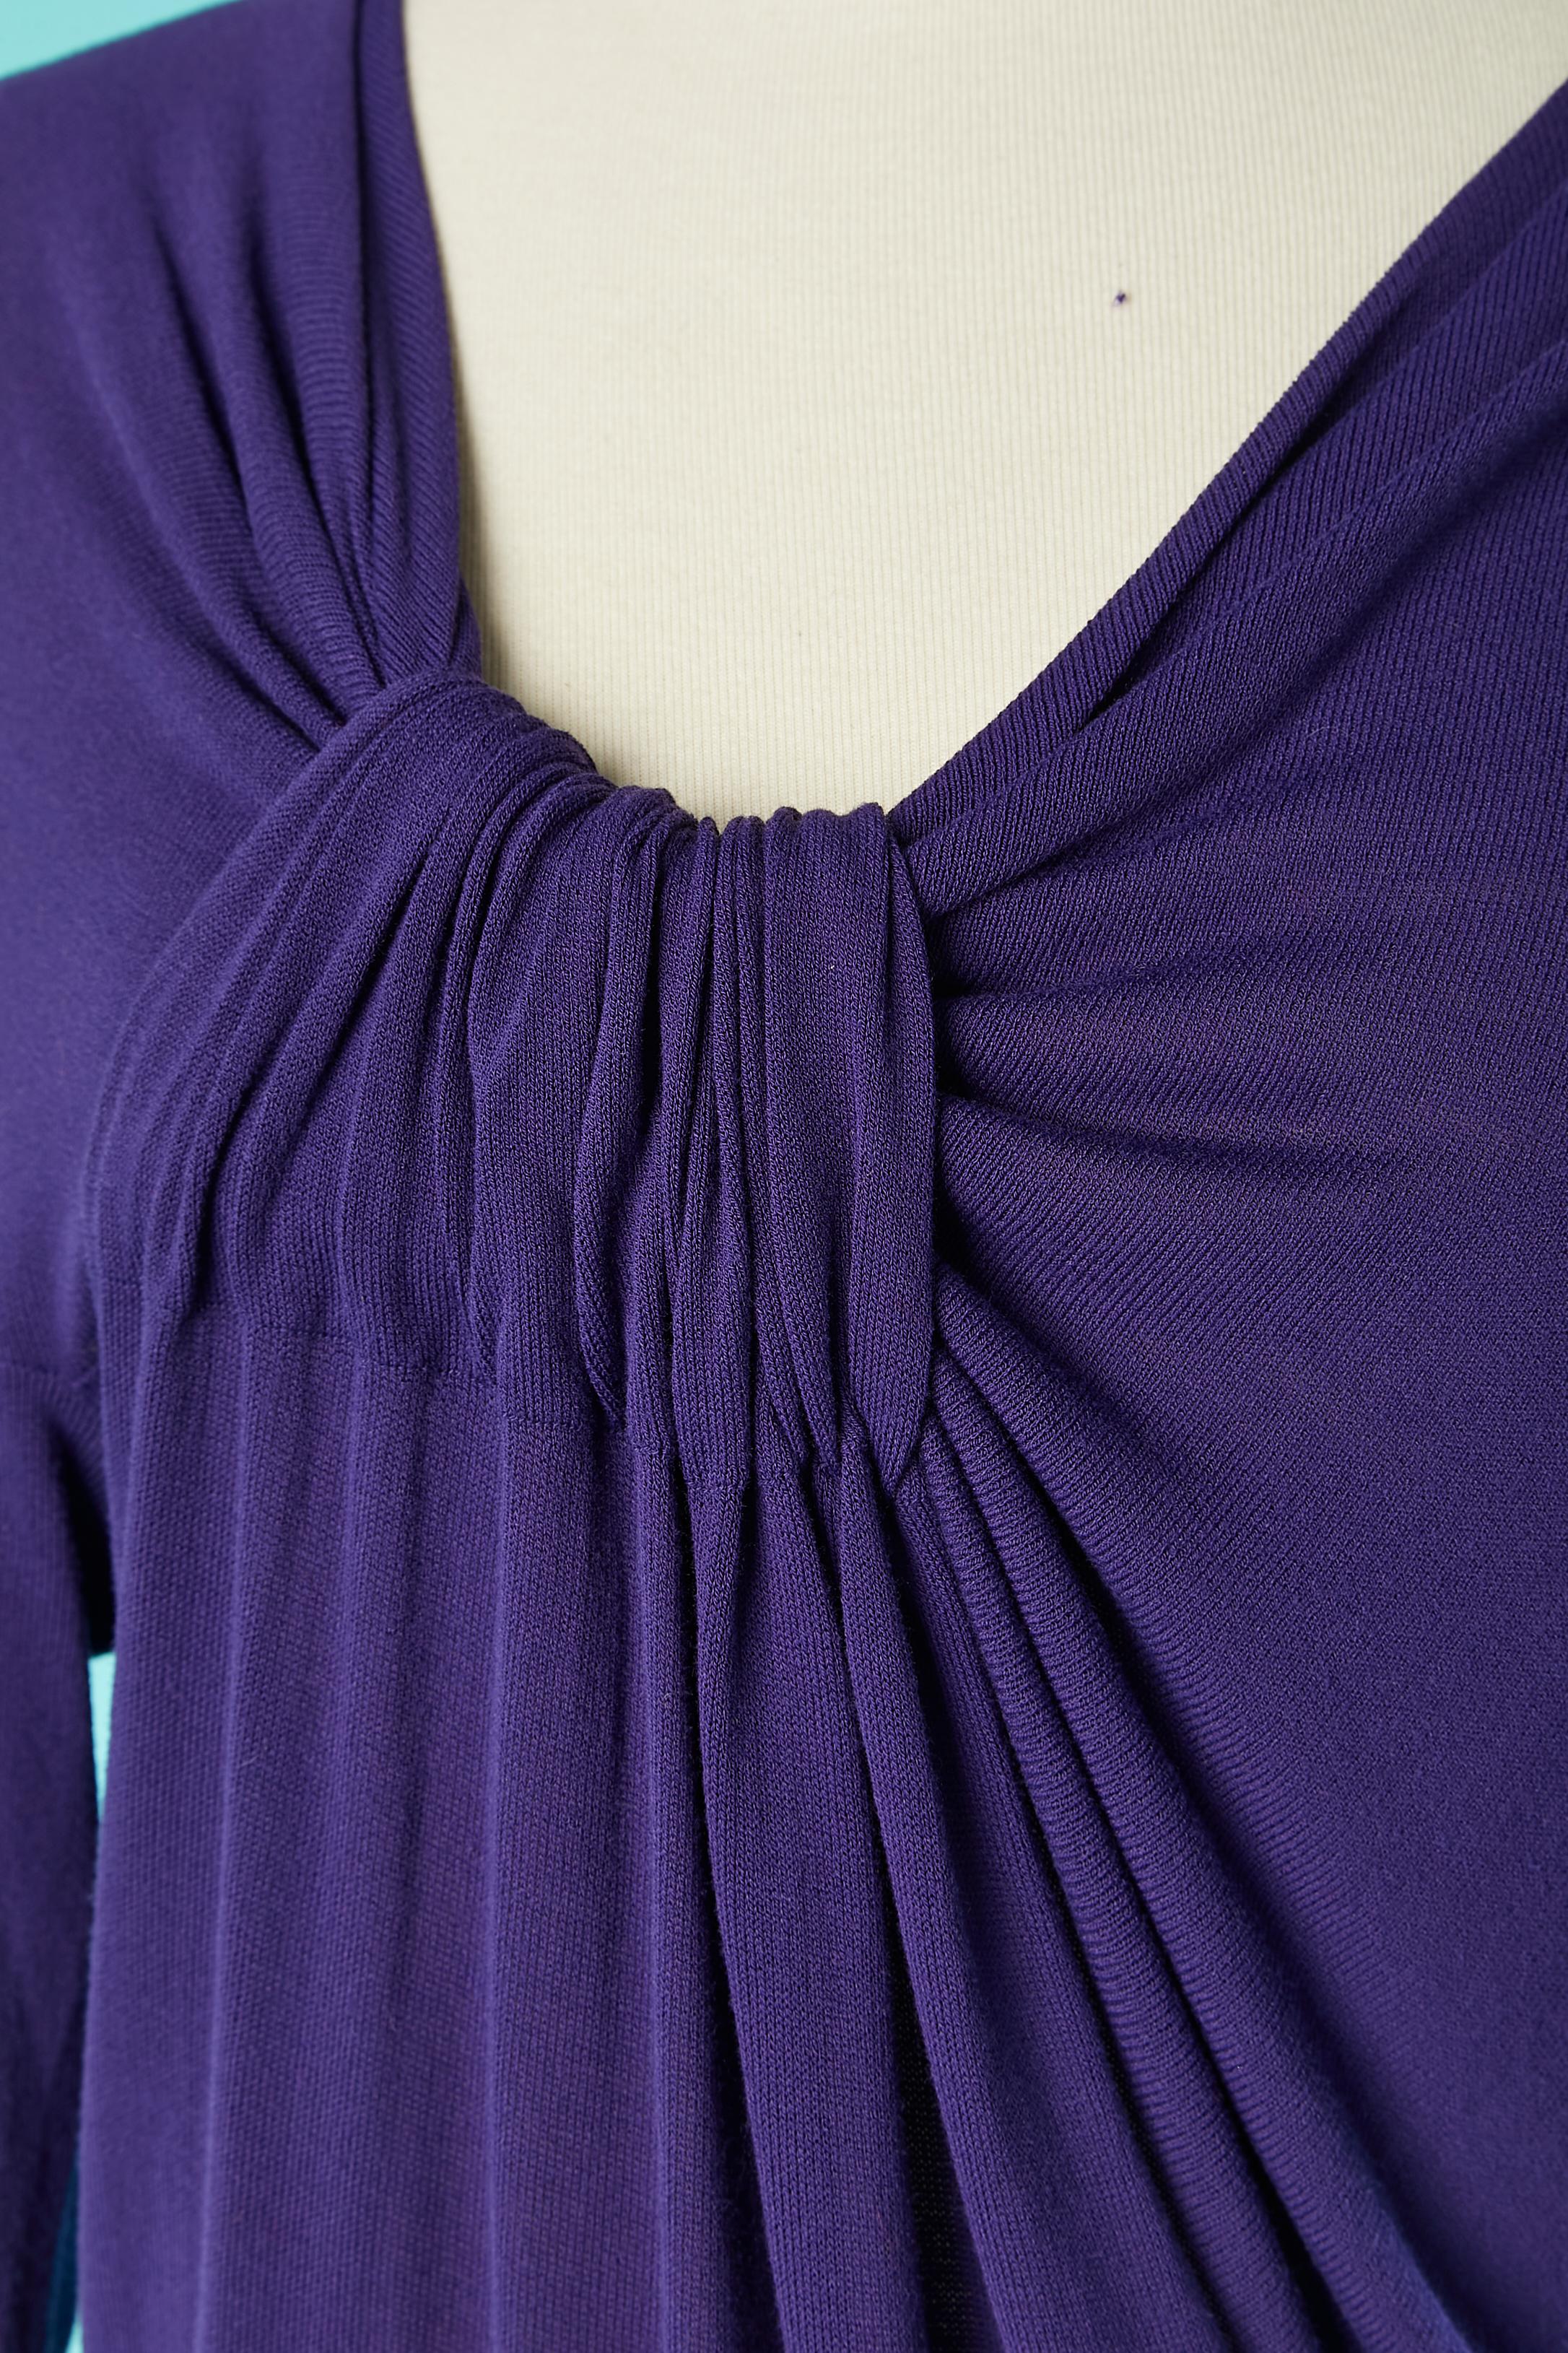 Purple draped rayon asymmetrical sweater.
Fabric composition: 100% rayon. 
SIZE M